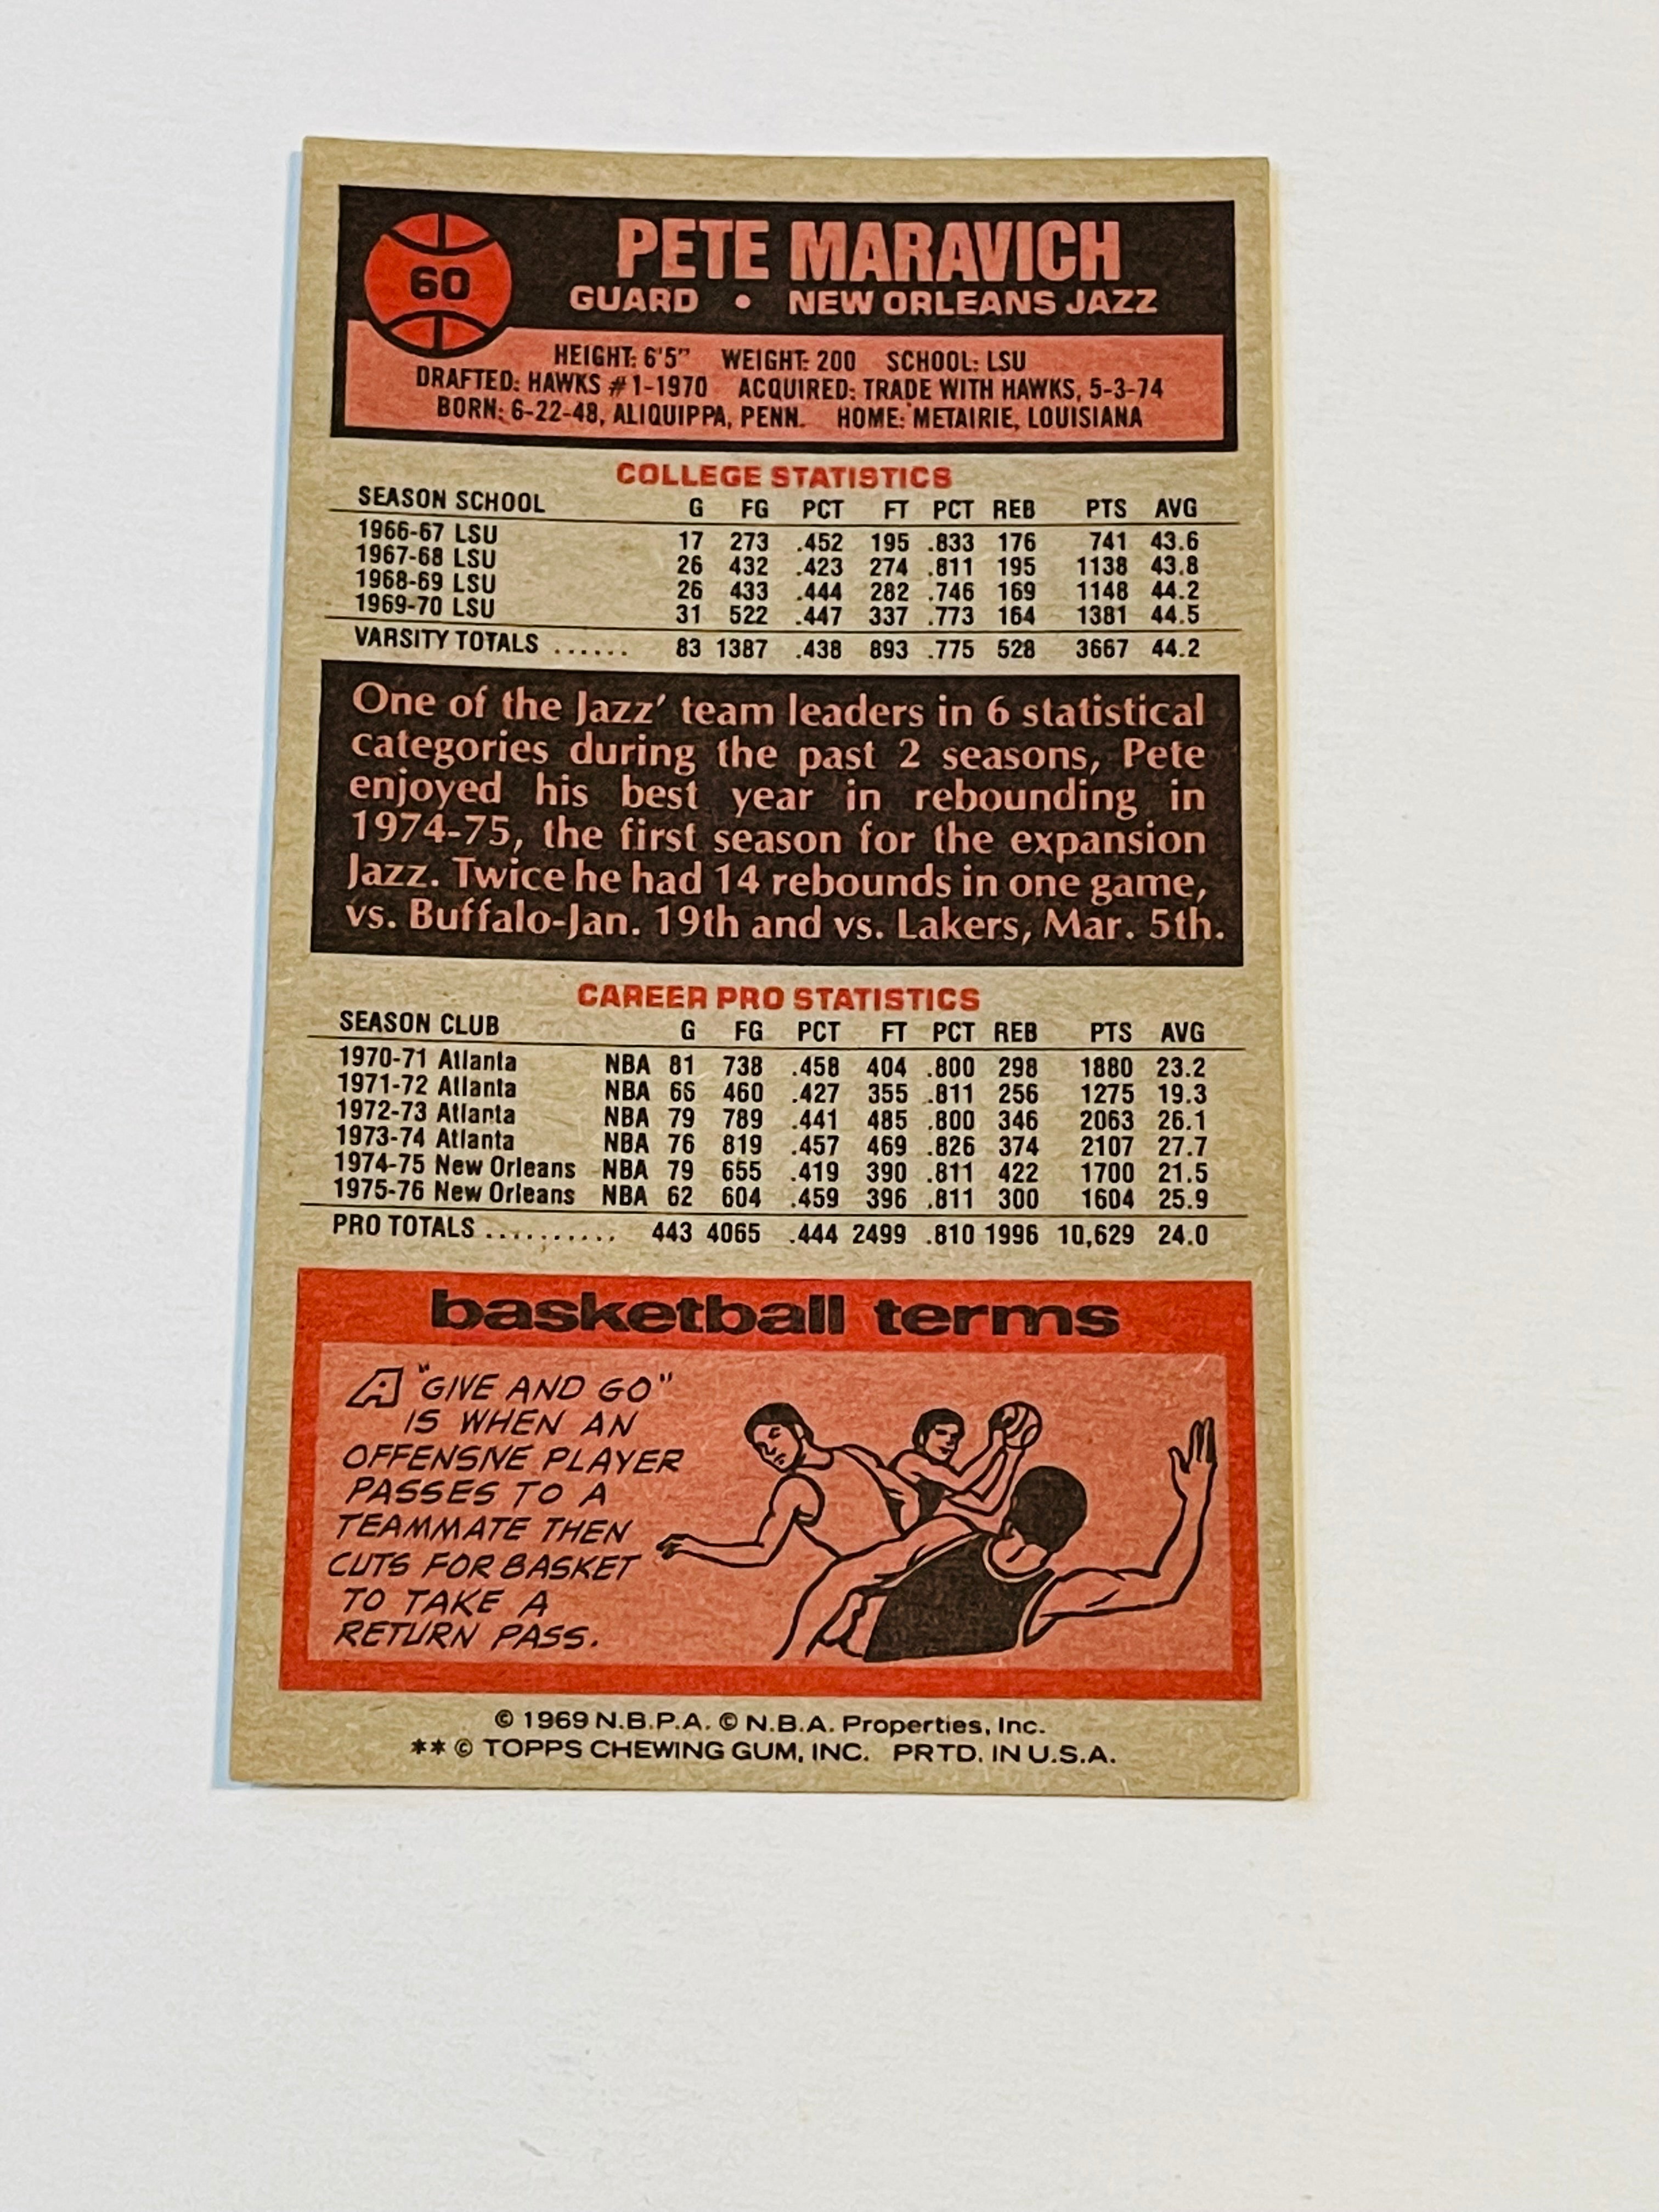 Pete Maravich rare Topps basketball card 1976